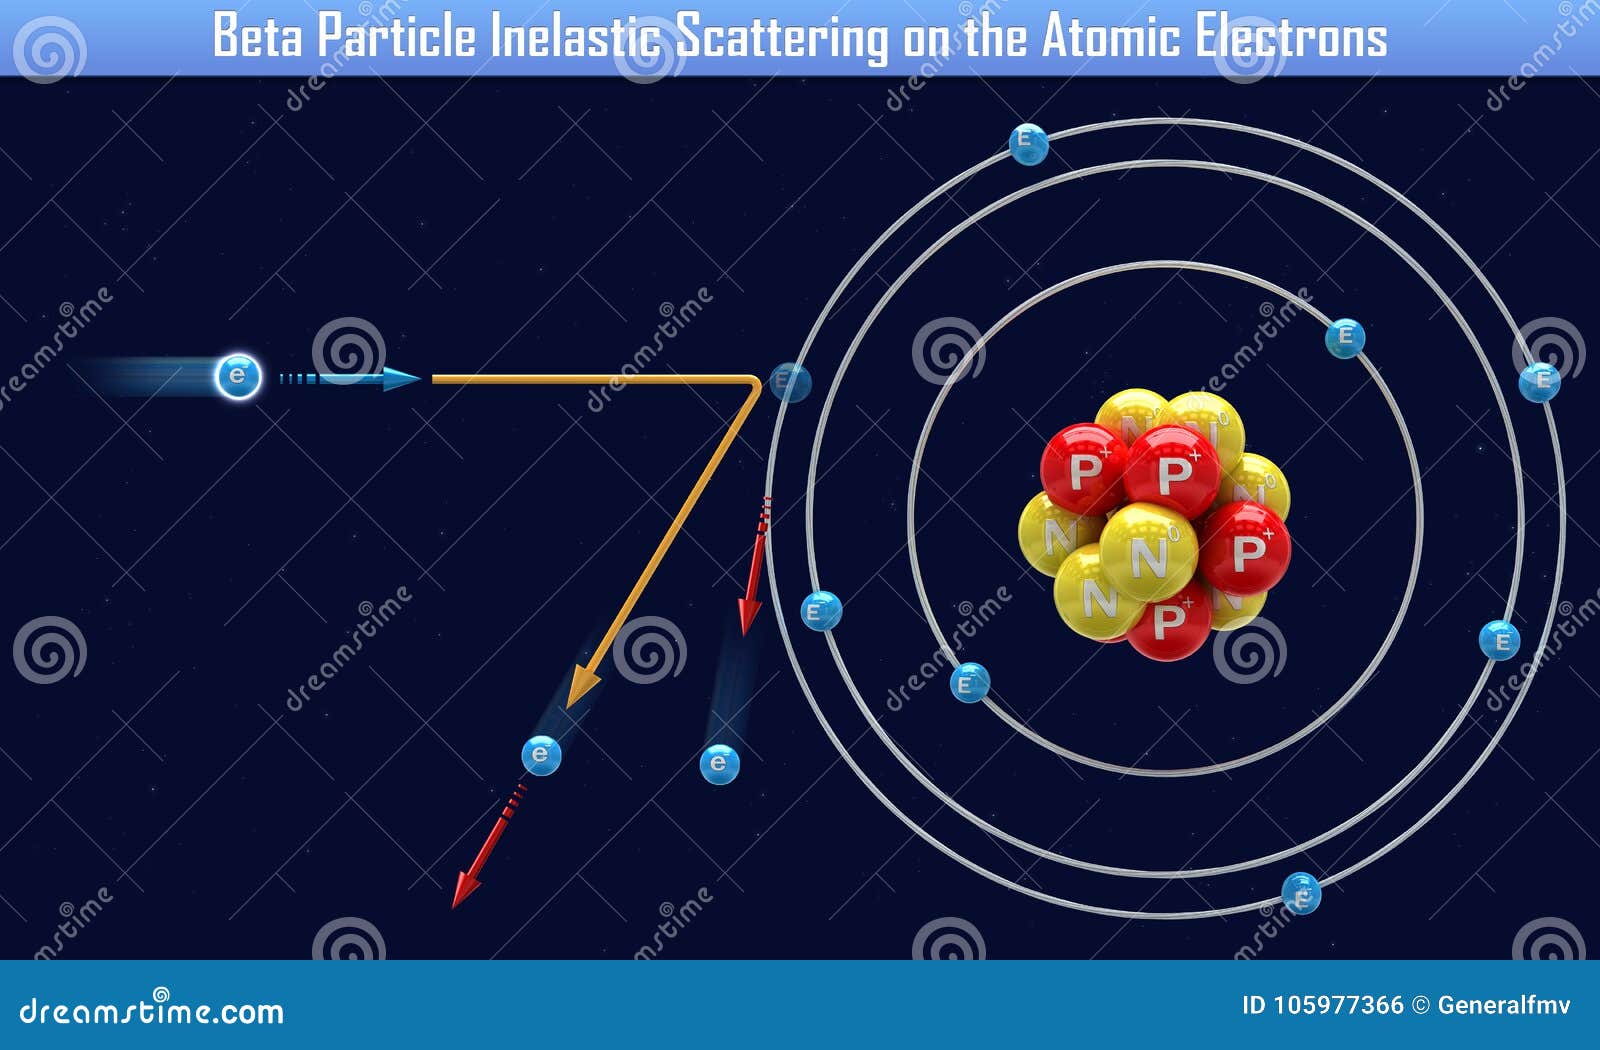 Бета частица и электрон являются. Рассеяние электронов на атомных ядрах. Бета частица. Image of Beta Particle. Elastic Neutron scattering.